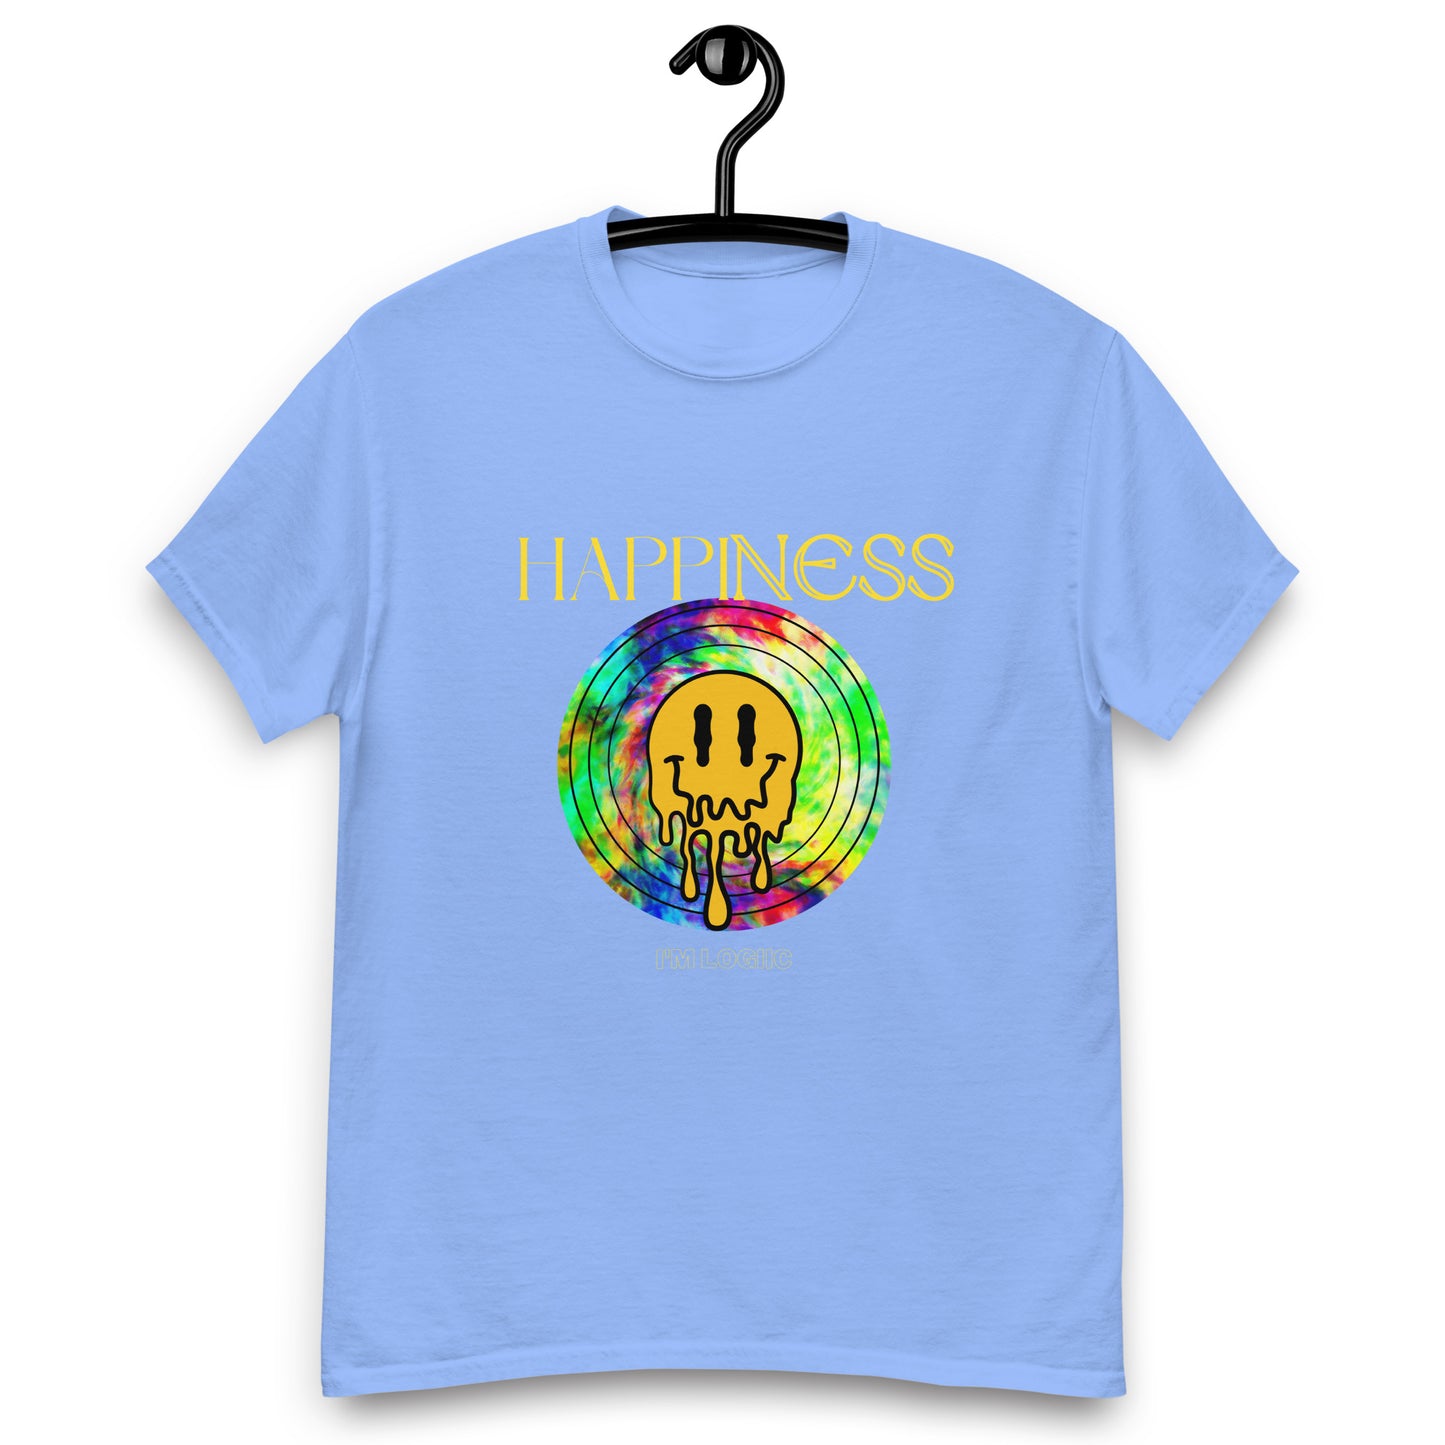 Happiness Christian Tshirt